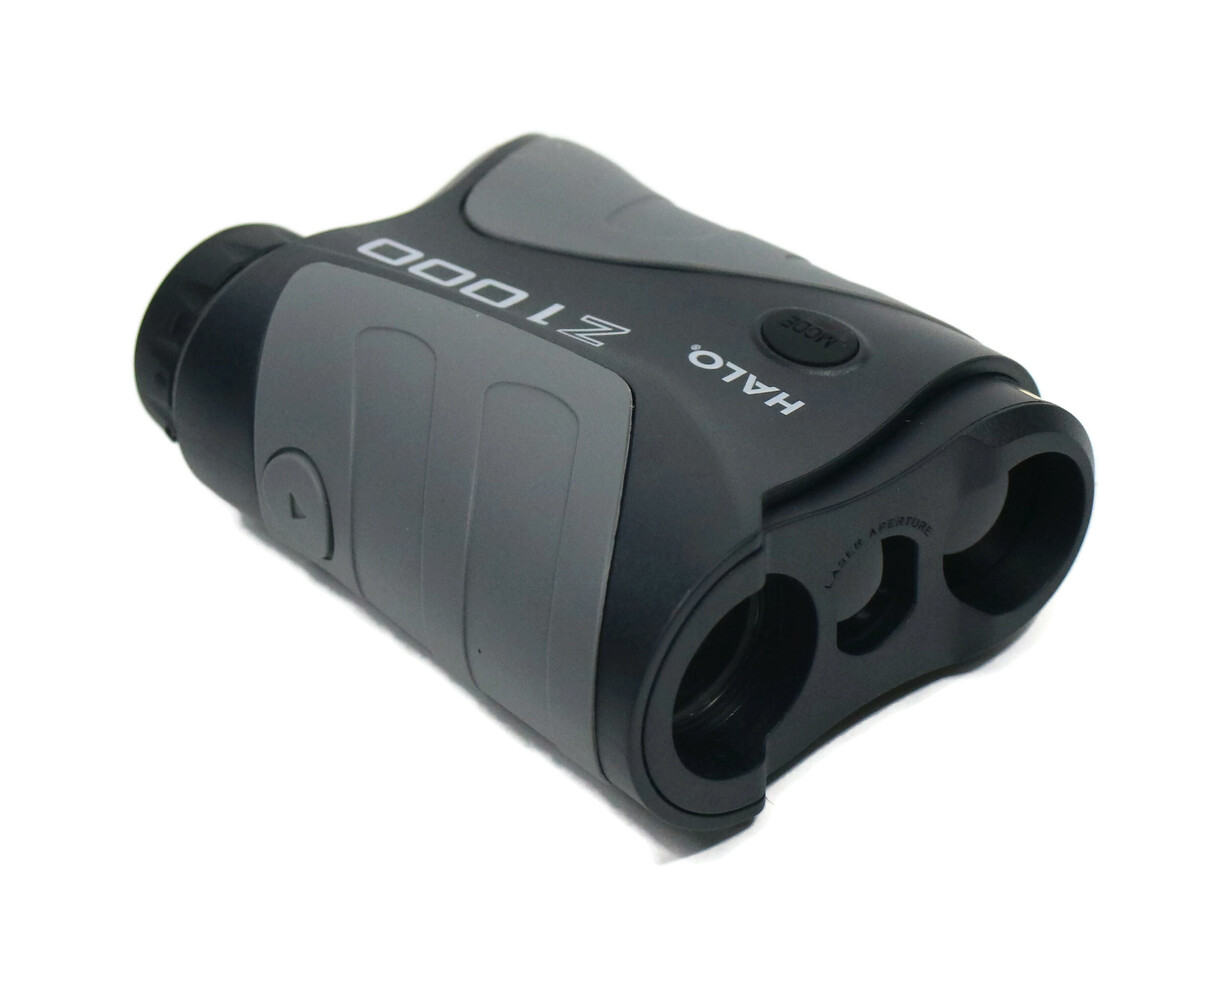 HALO Z1000 Hunting Rangefinder 6X Magnification 22mm Objective Black Optic